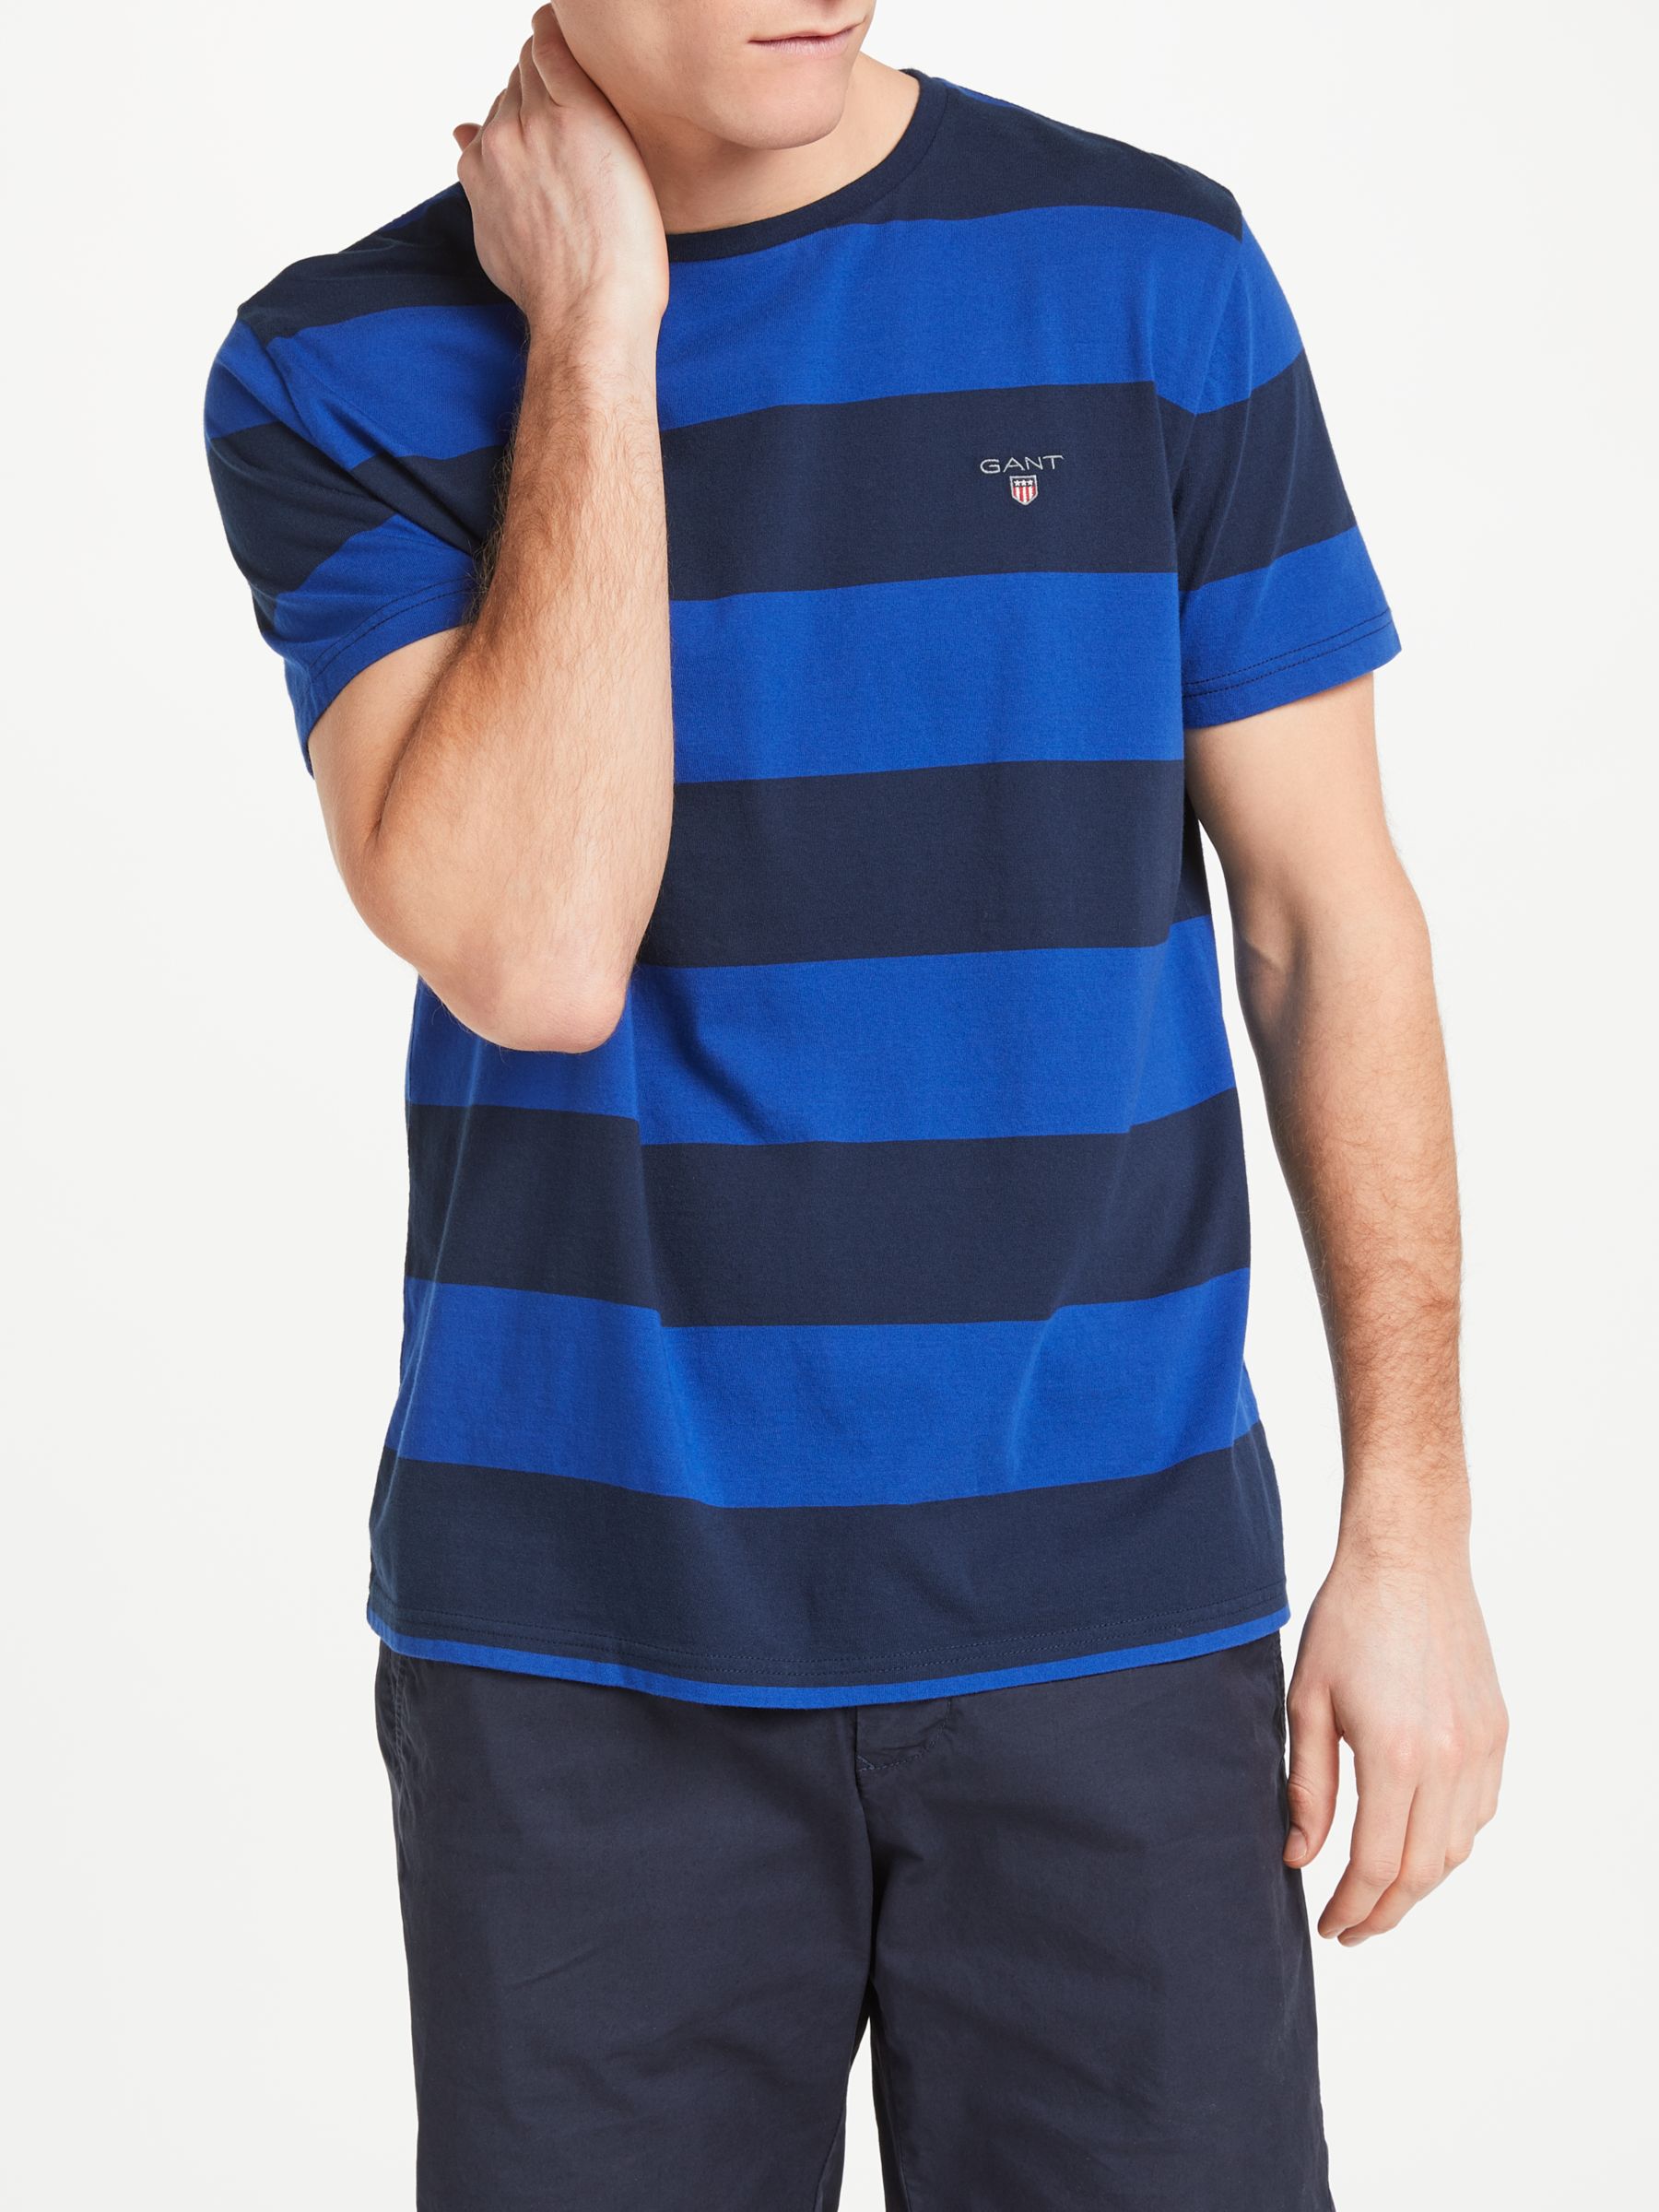 GANT Original Barstripe Cotton T-Shirt, Blue, XXXL